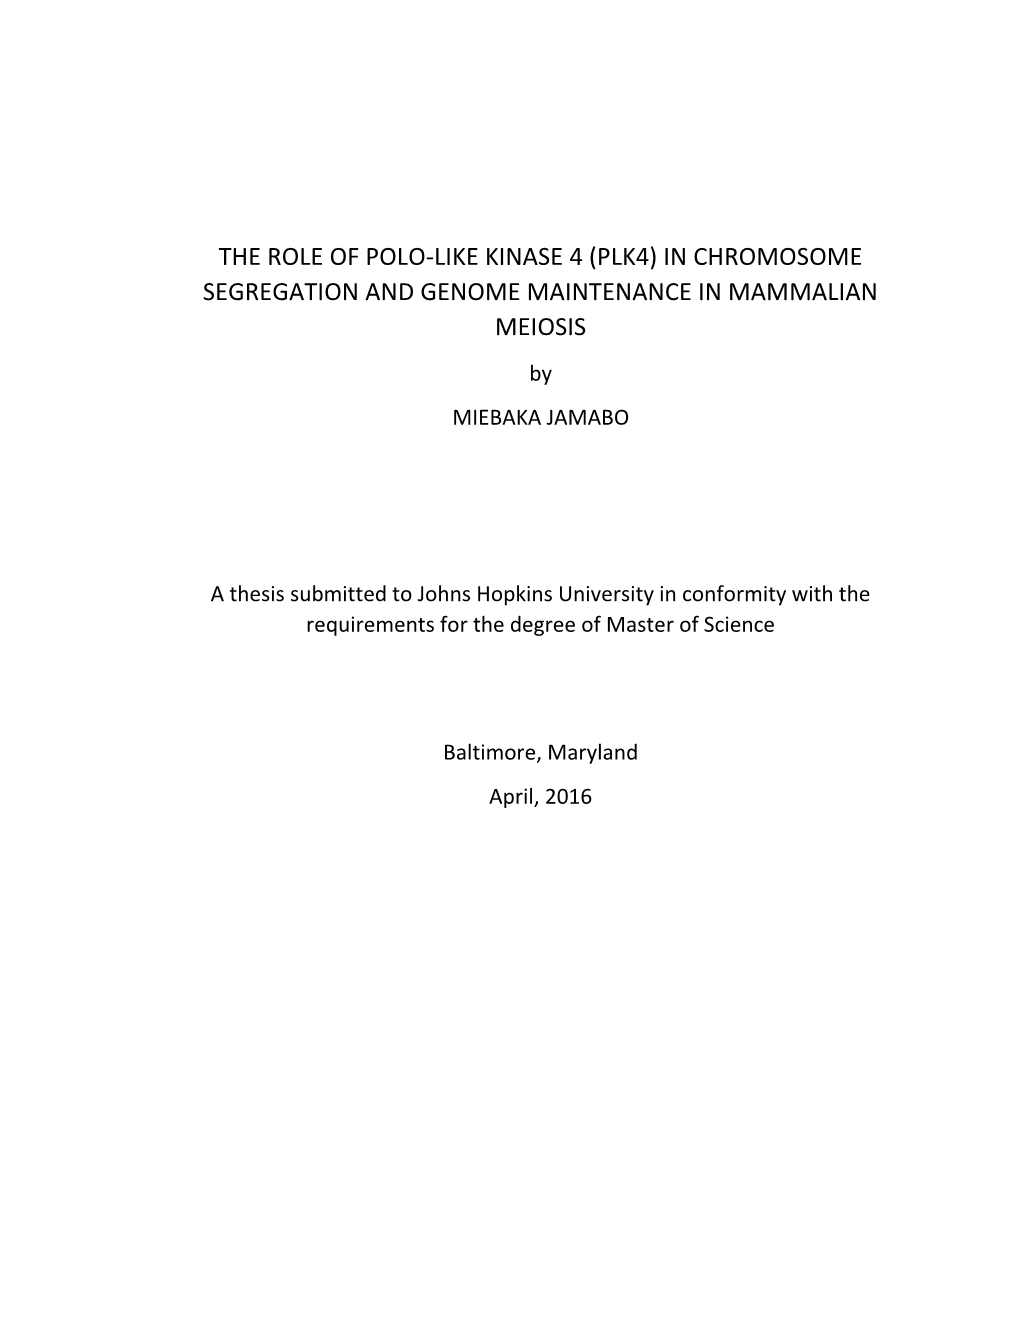 PLK4) in CHROMOSOME SEGREGATION and GENOME MAINTENANCE in MAMMALIAN MEIOSIS by MIEBAKA JAMABO